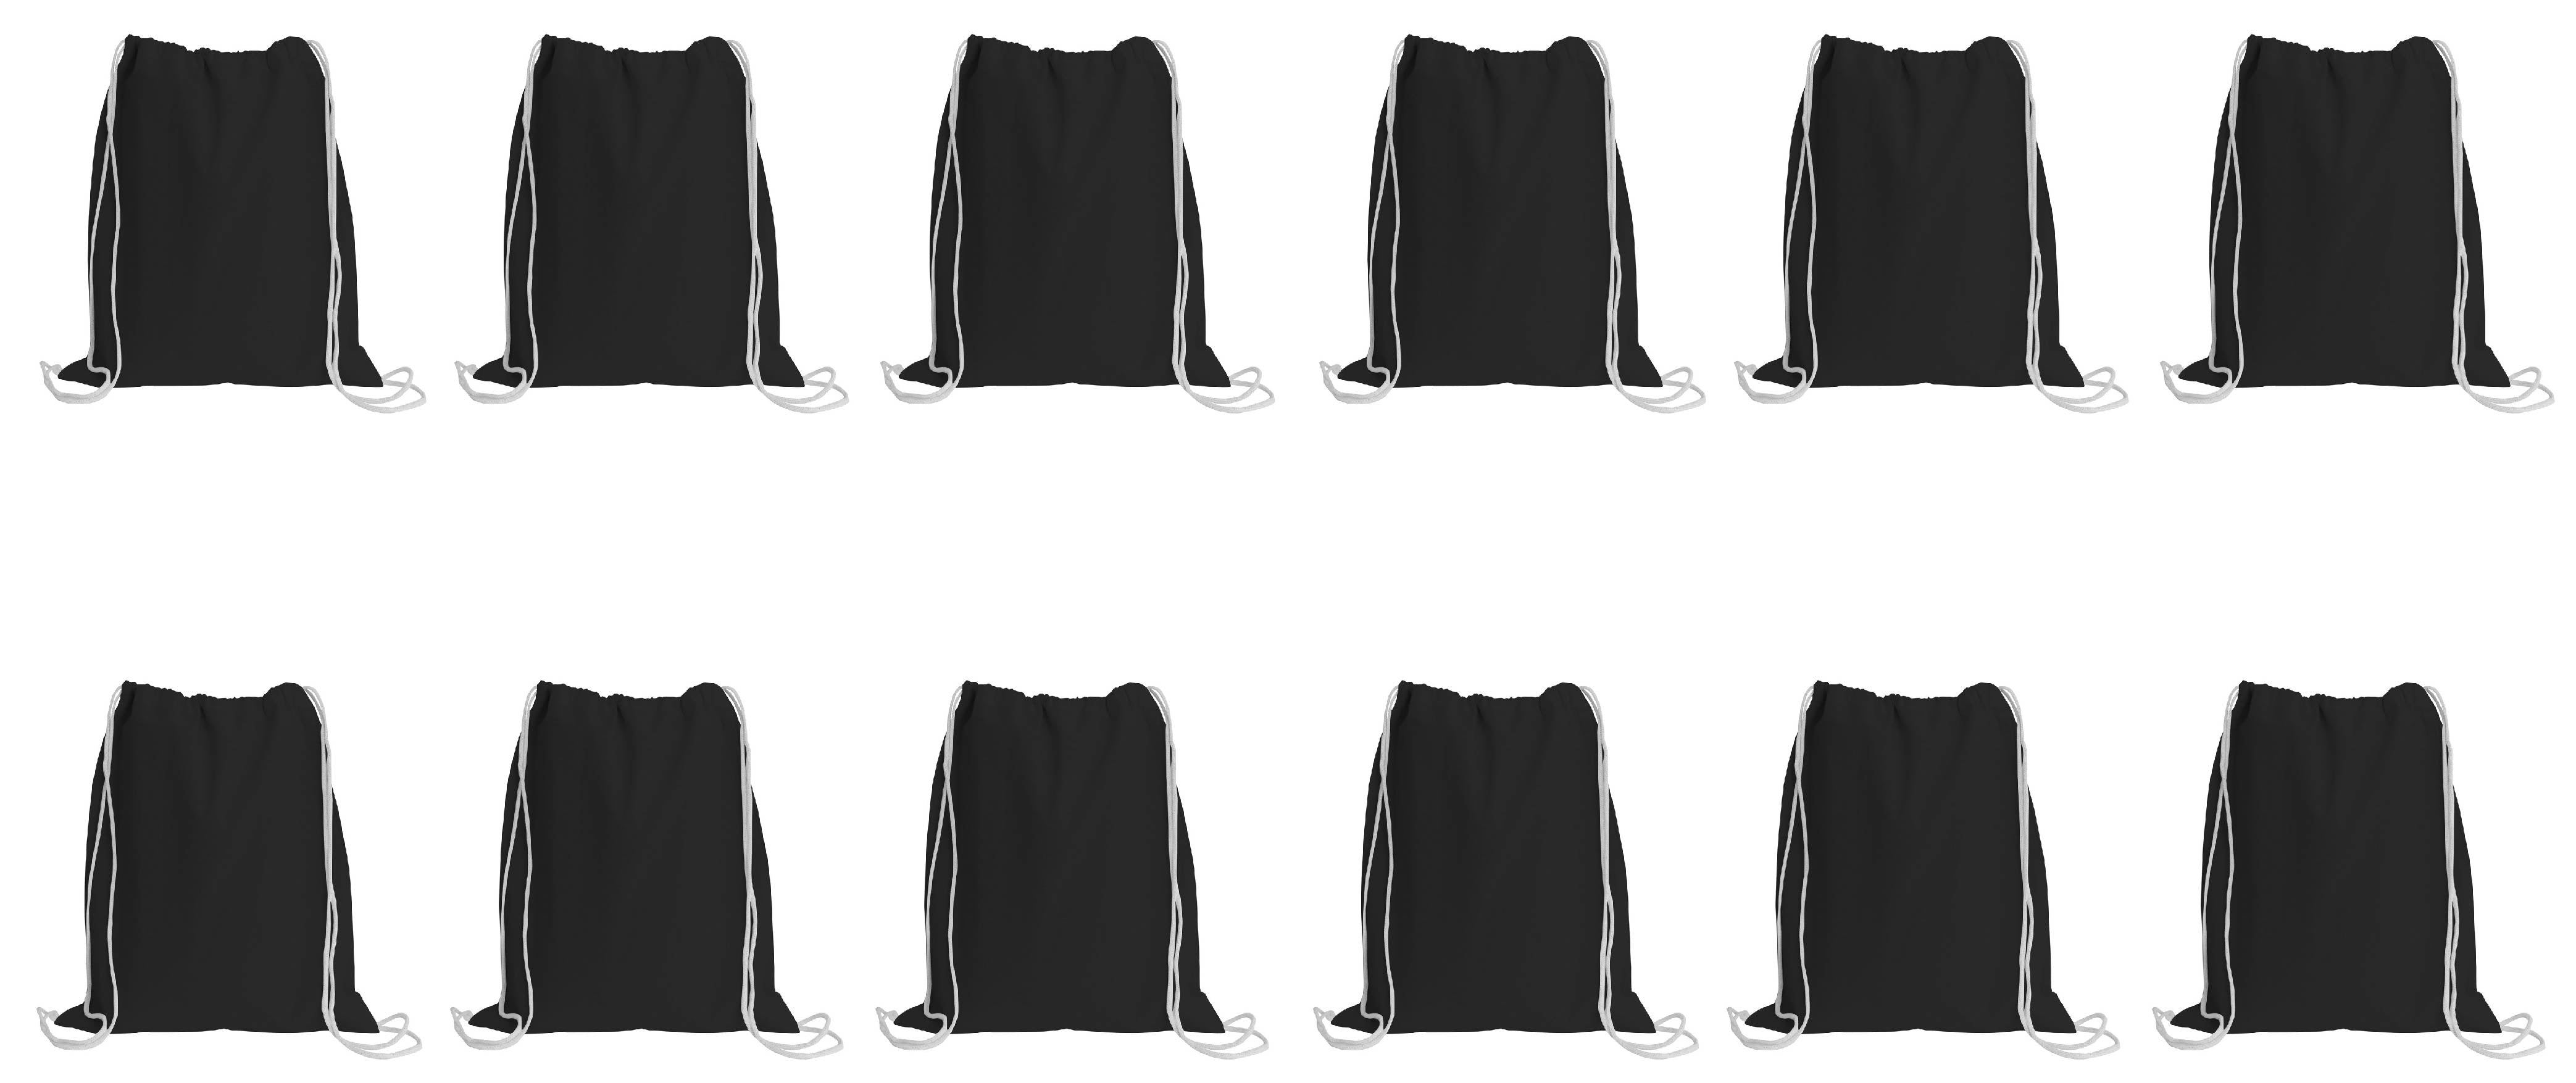 Sport Drawstring Bag, 100% Cotton, Black Color